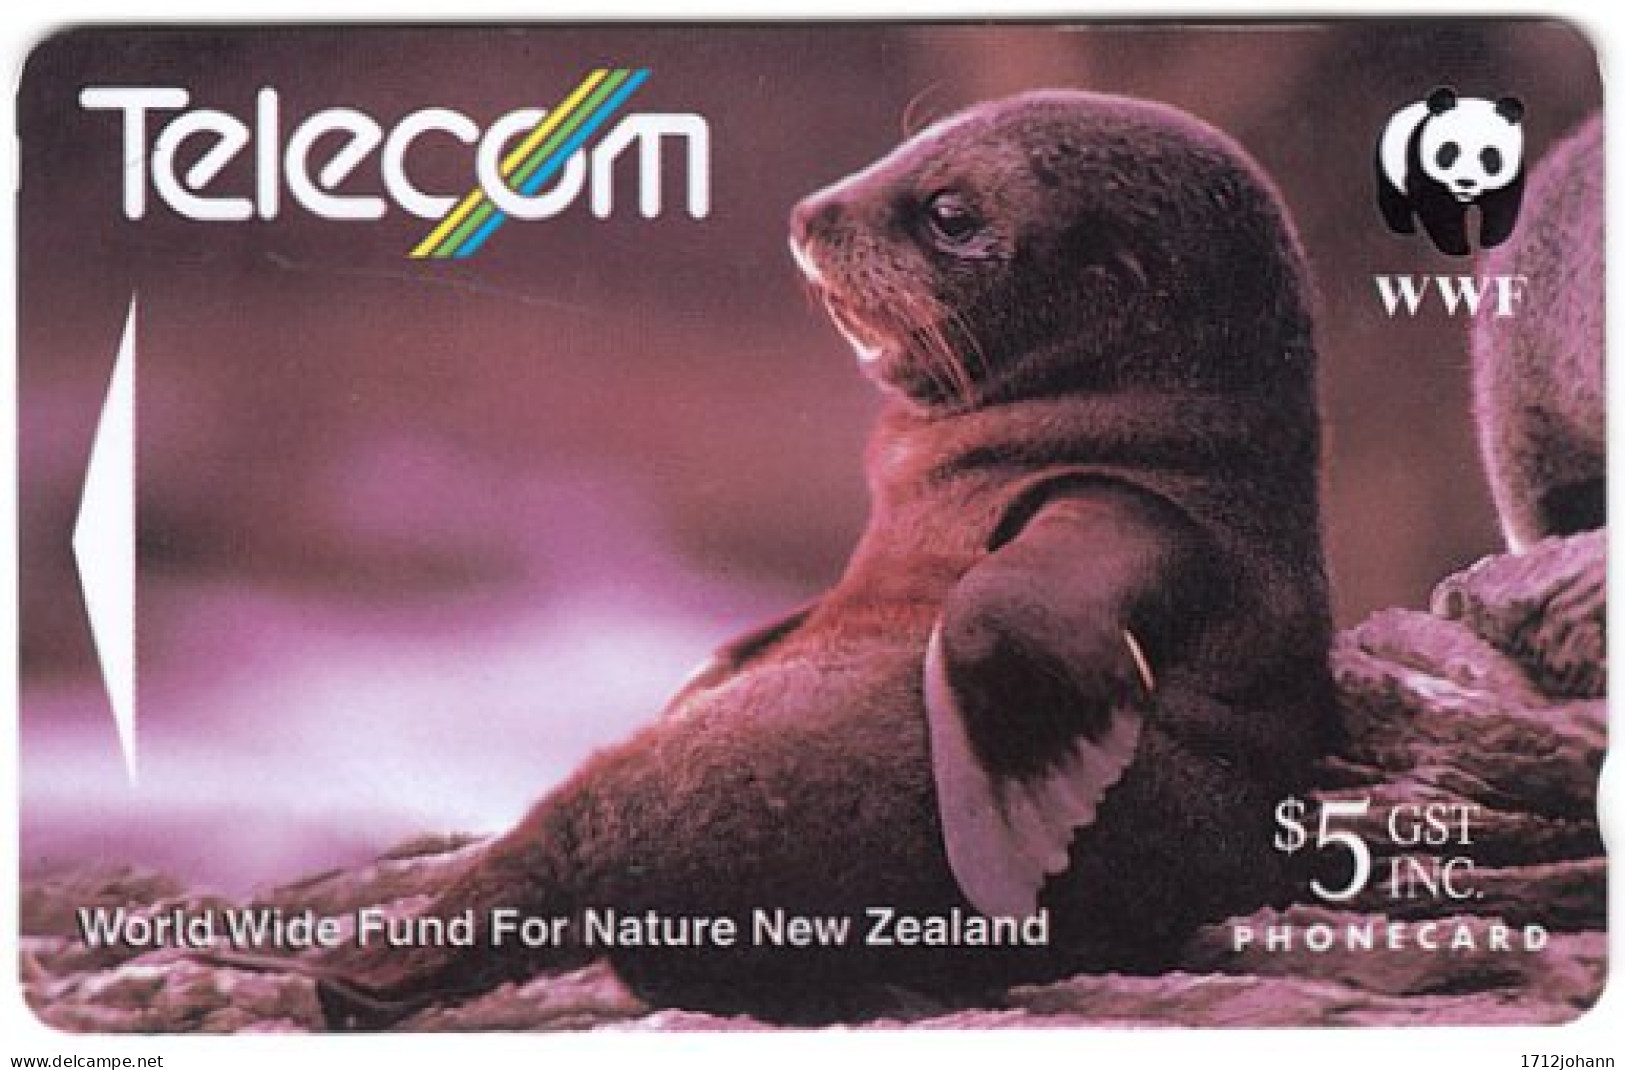 NEW ZEALAND A-944 Magnetic Telecom - Animal, Seal - 141BO - Used - New Zealand